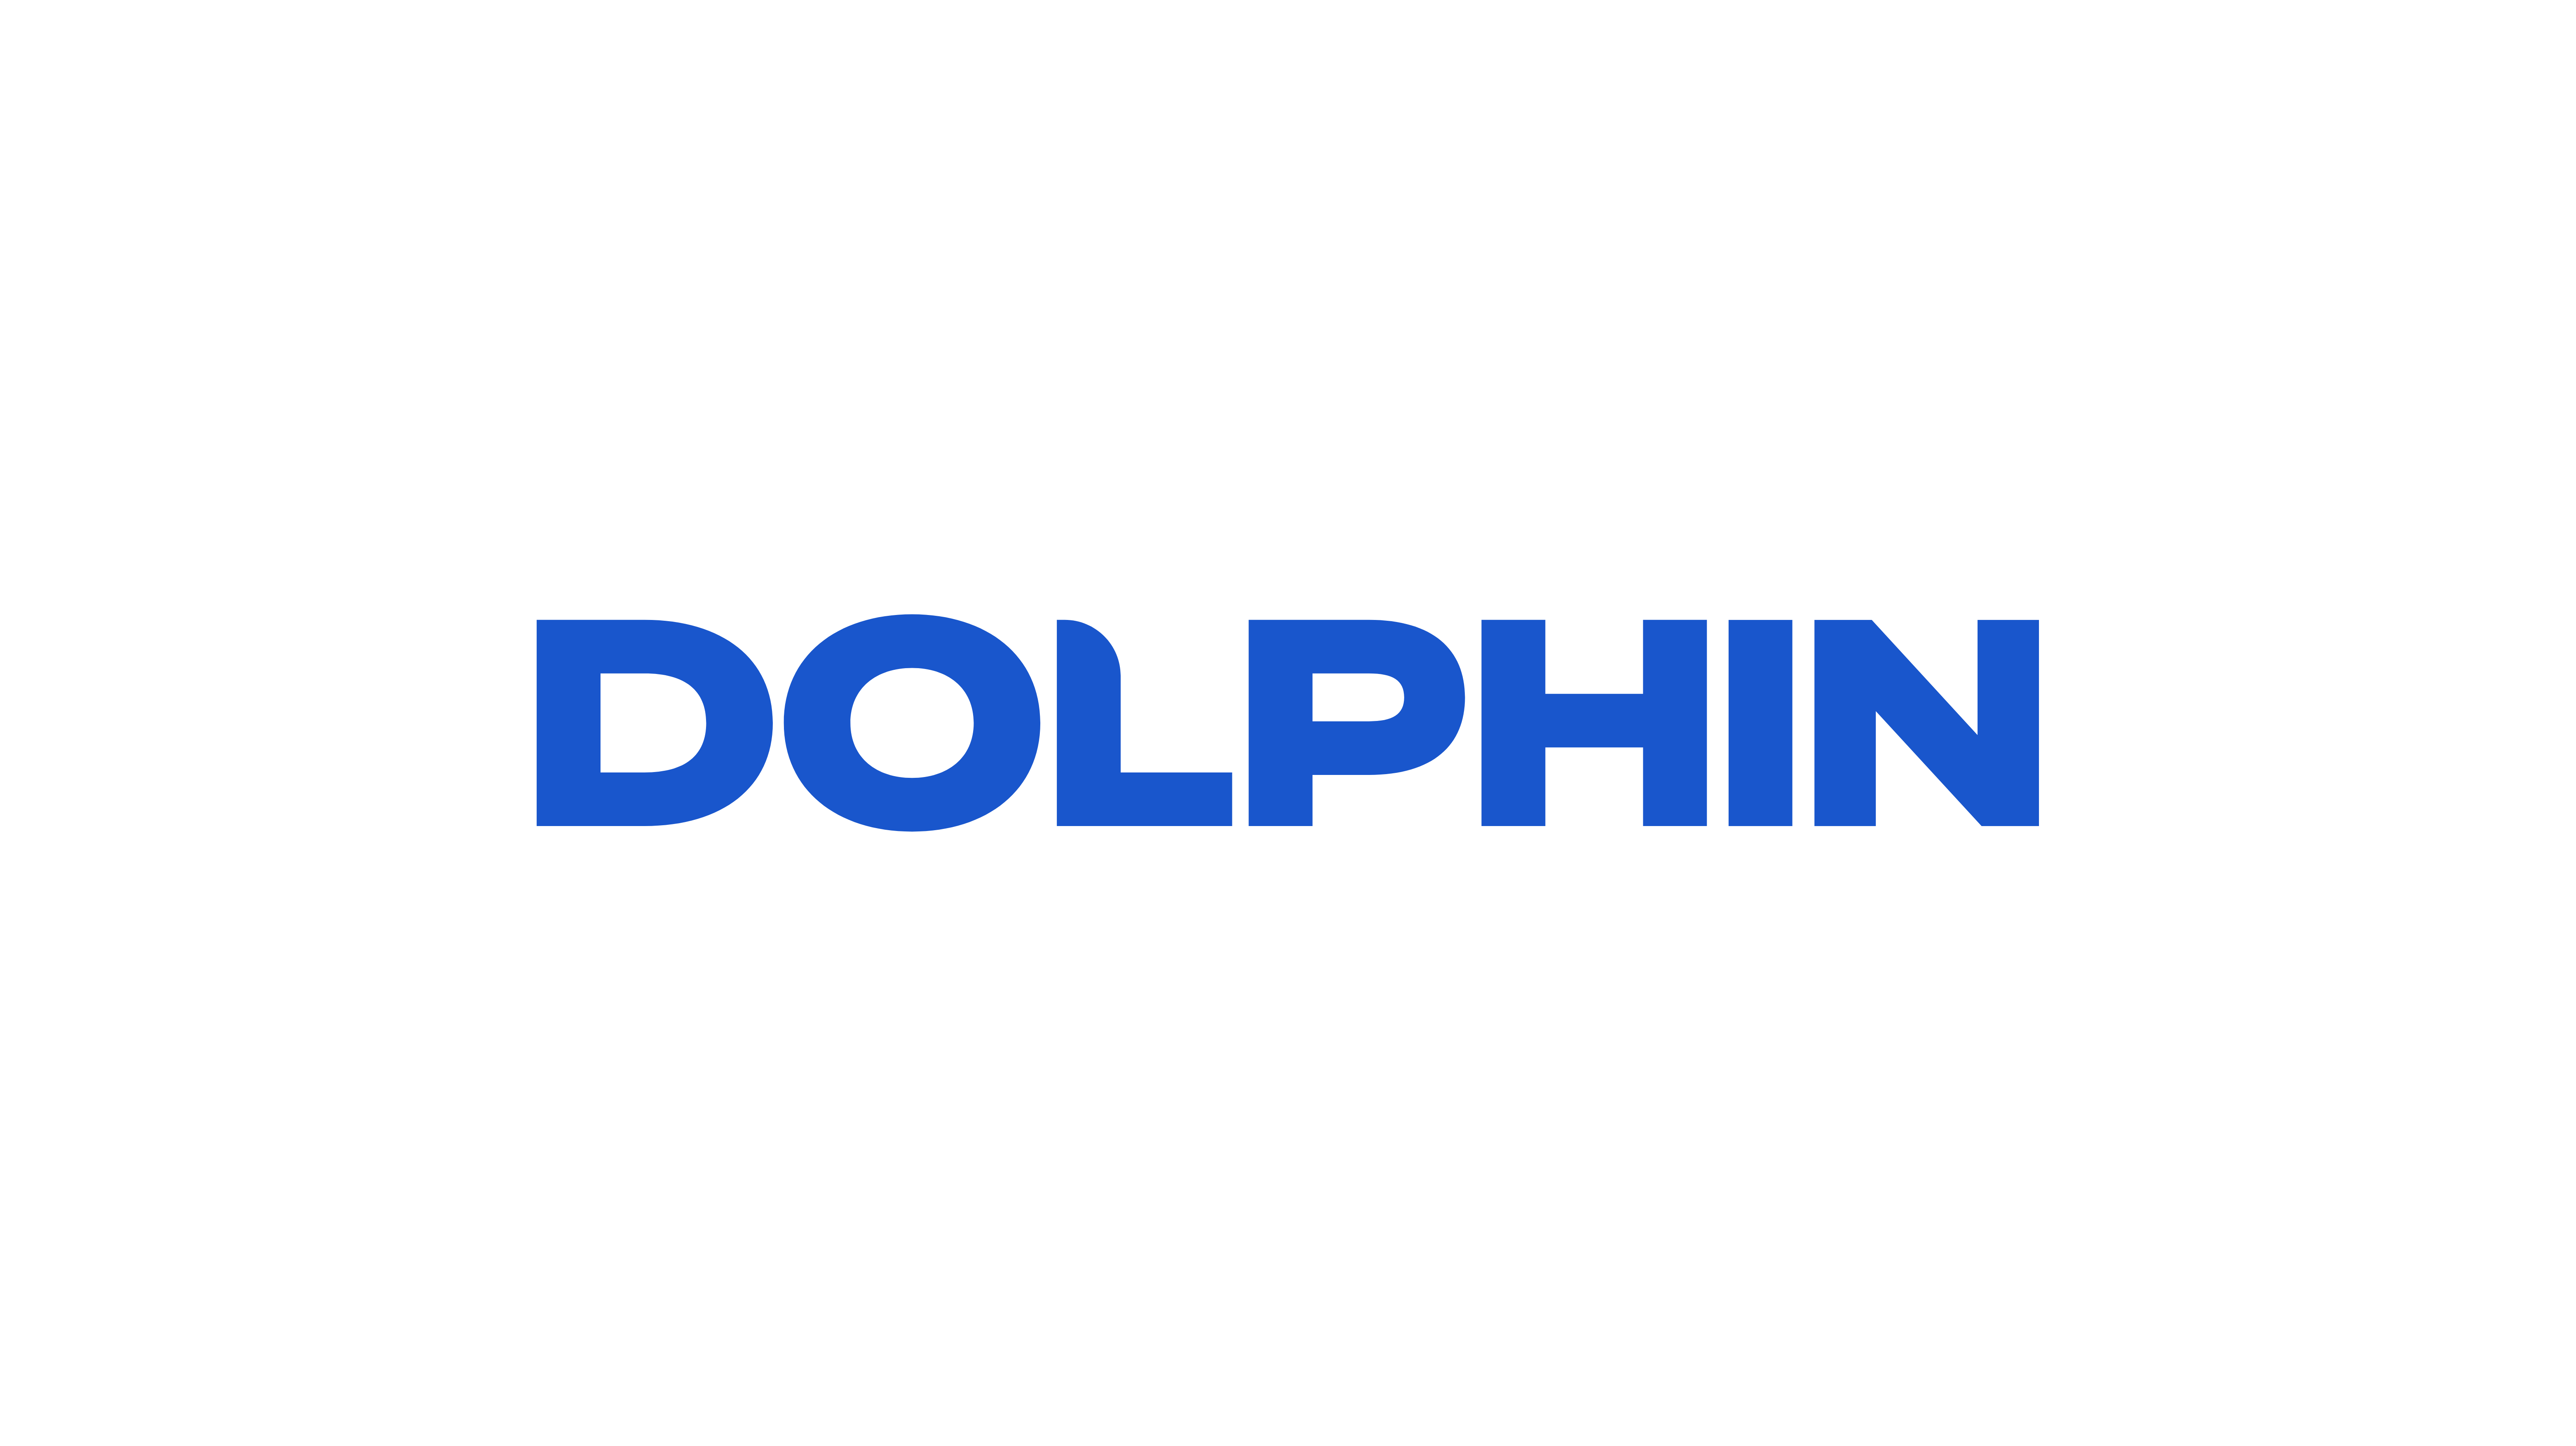 Dolphin Entertainment